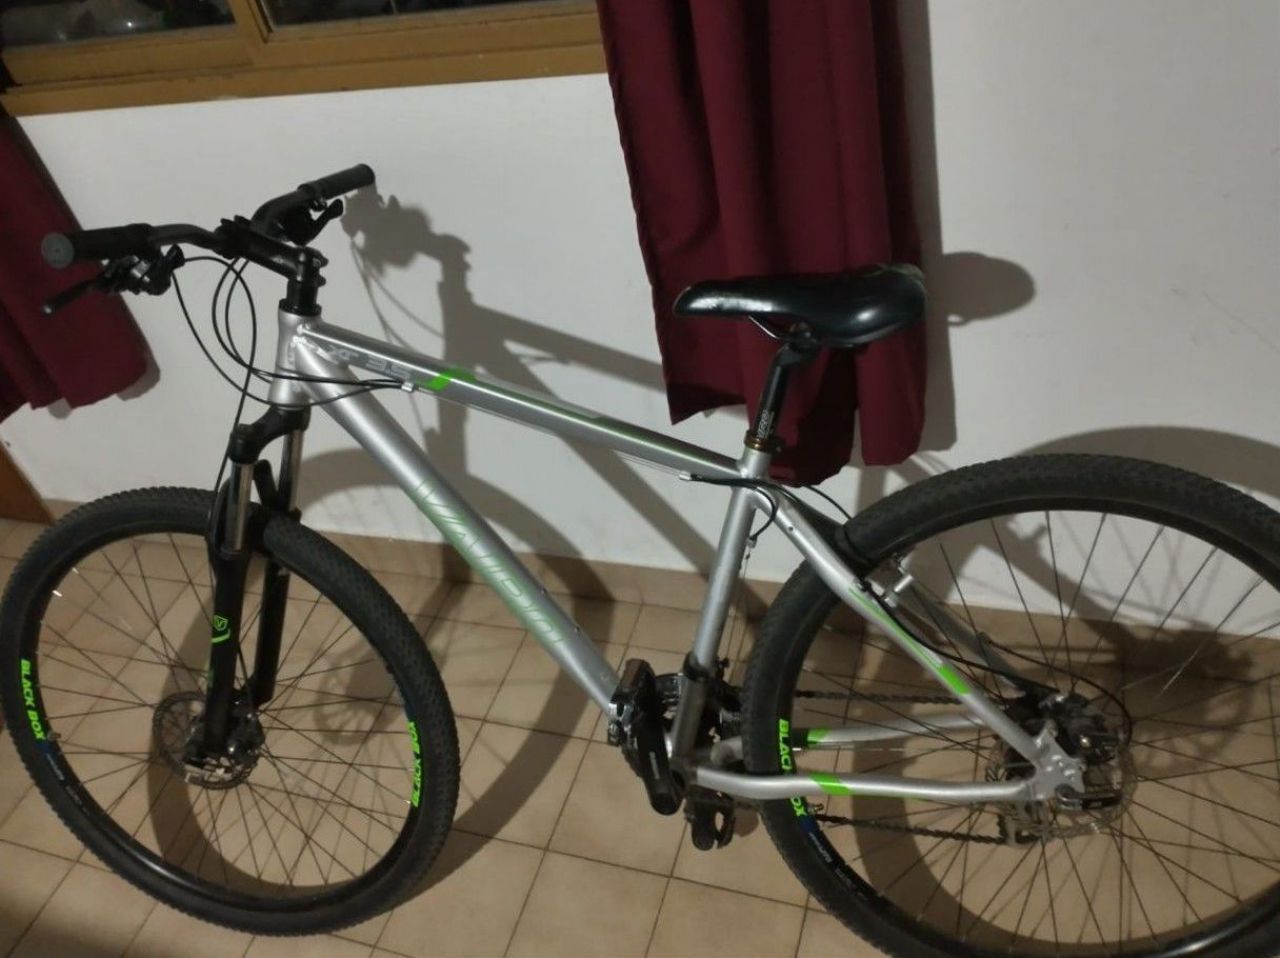 Bicicleta Mountain Bike Usado en Mendoza, deRuedas